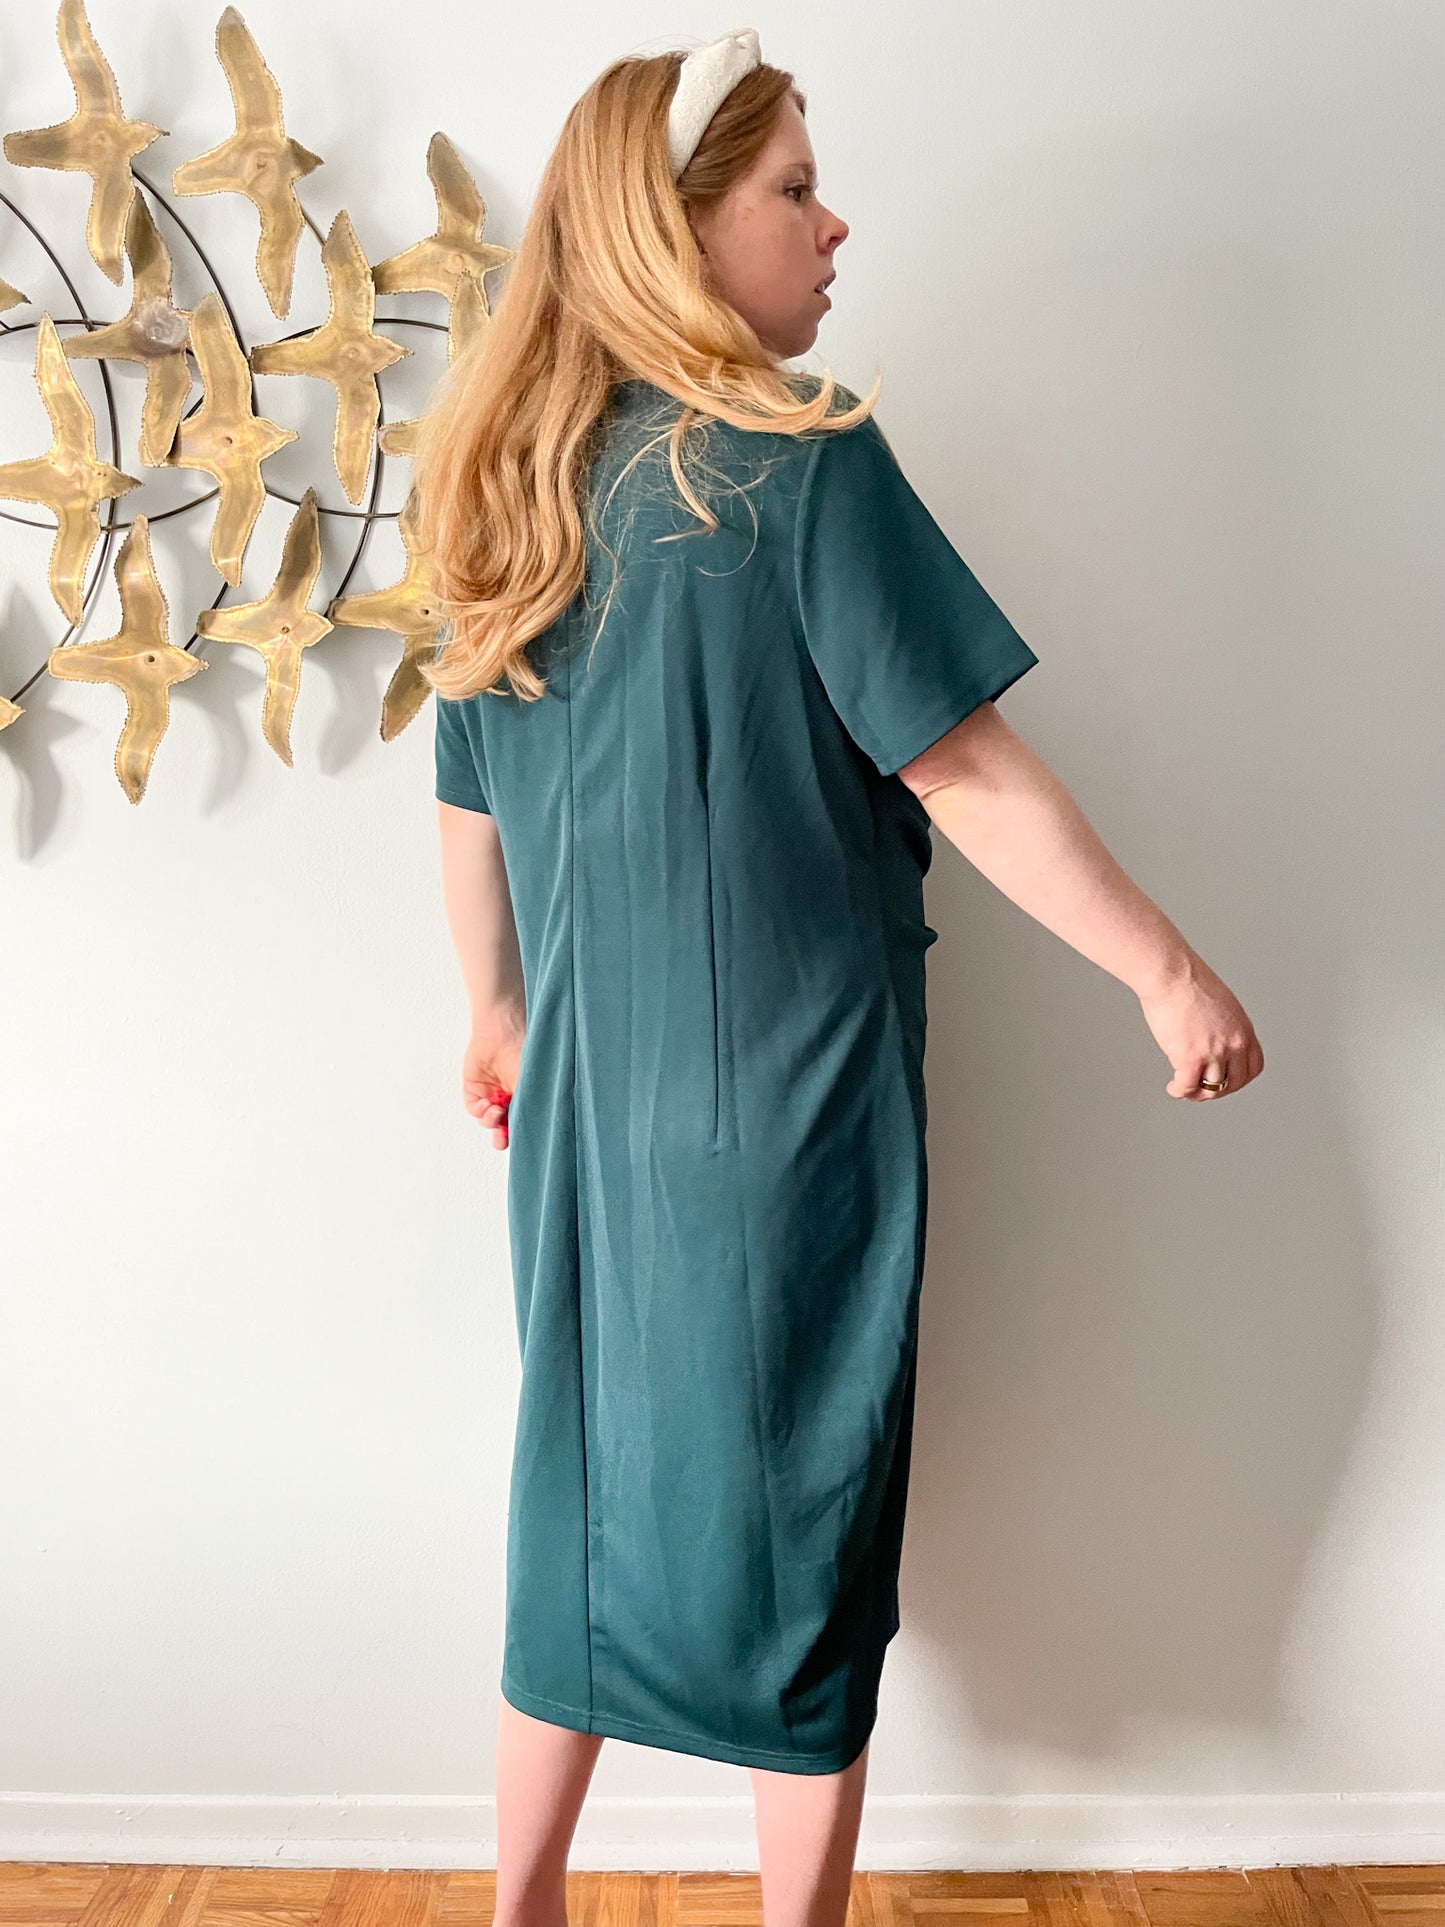 Hannah Nicole Teal Wrap Style Dress with Bow NWT - Size 20